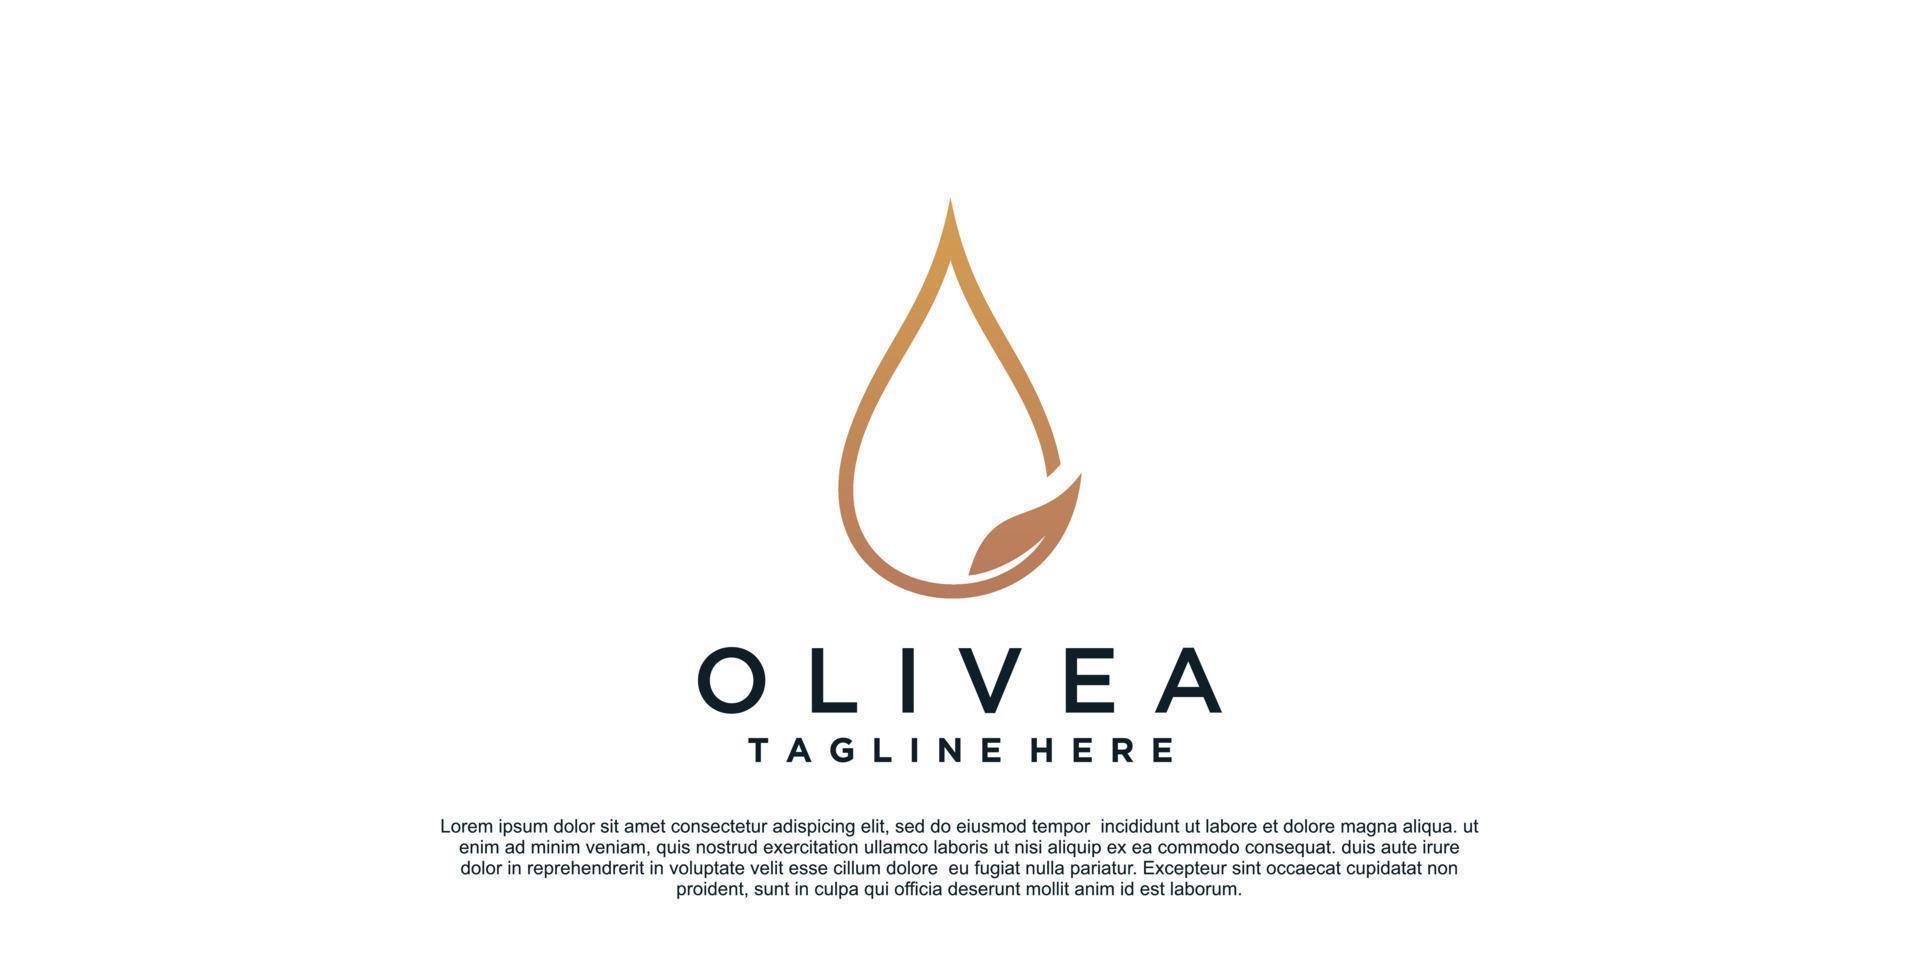 Olivea logo design with simple concept Premium Vector Part 1